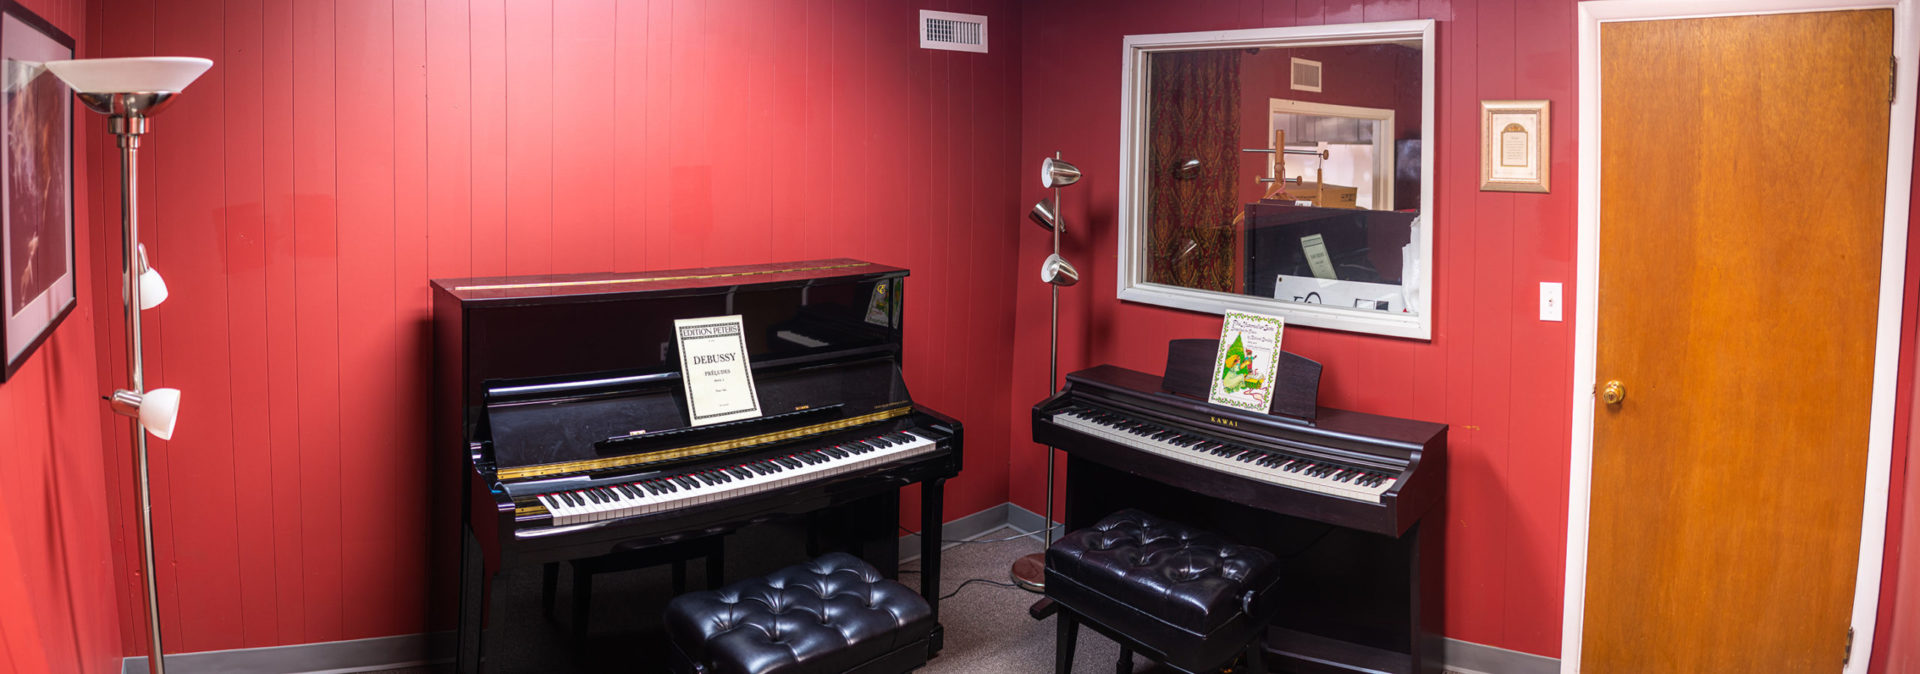 portland-piano-lessons-piano-room-at-michelles-piano-in-portland-or-pic2